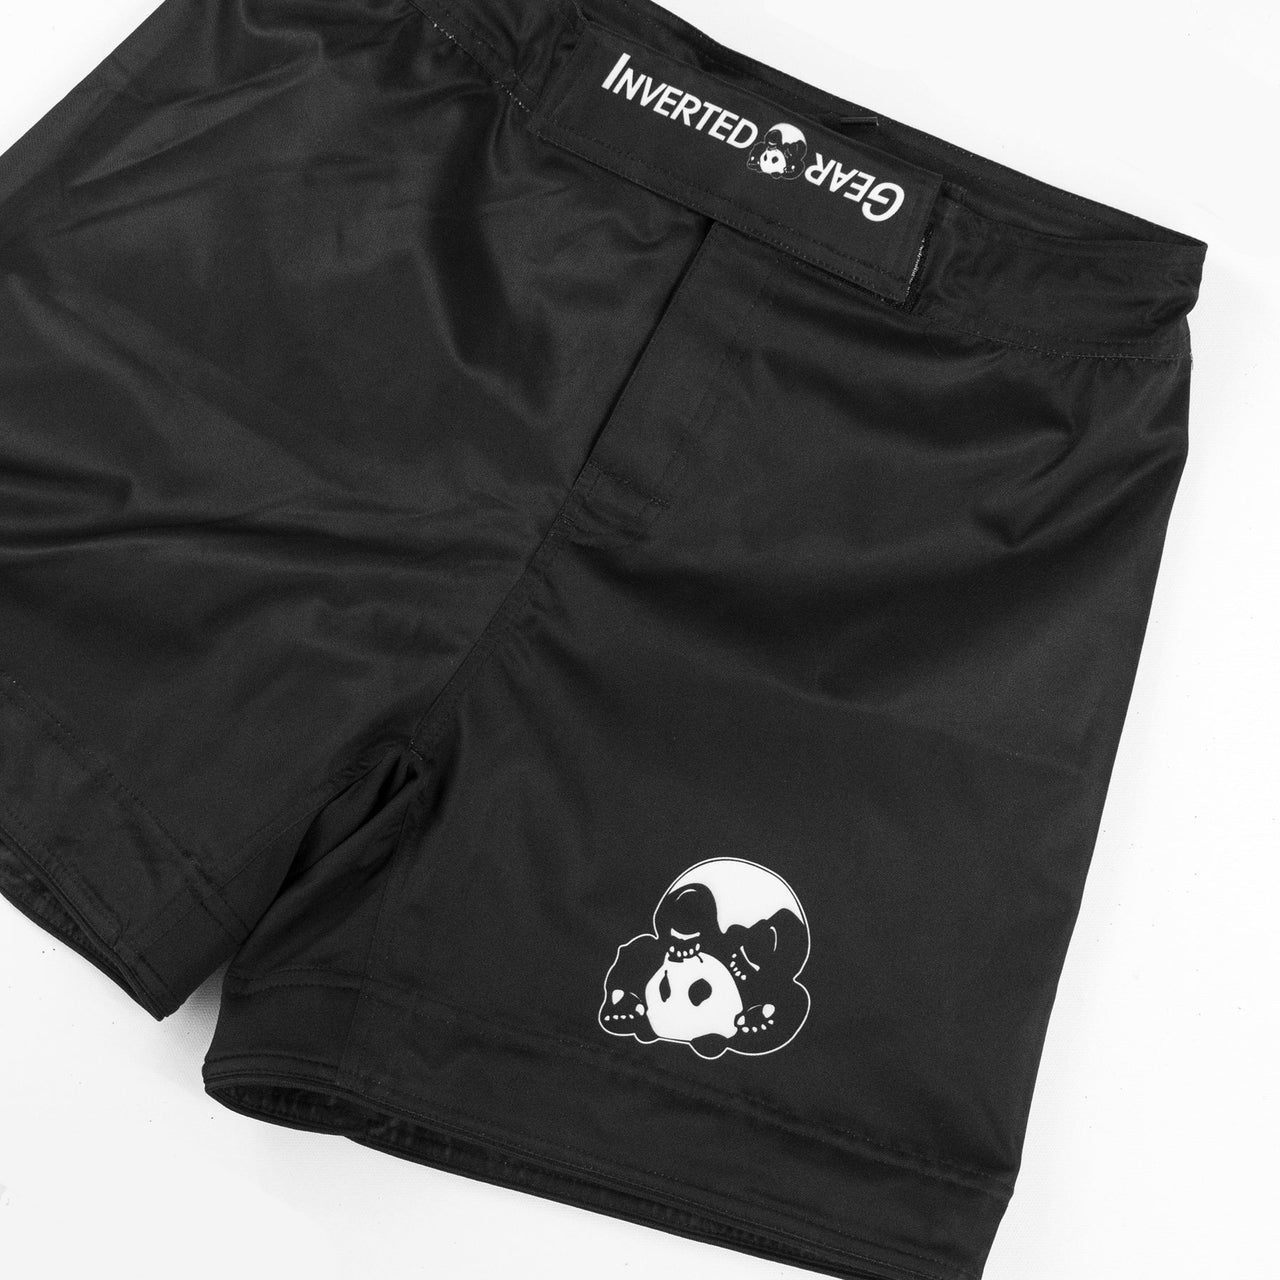 Inverted Gear Board Shorts - Black